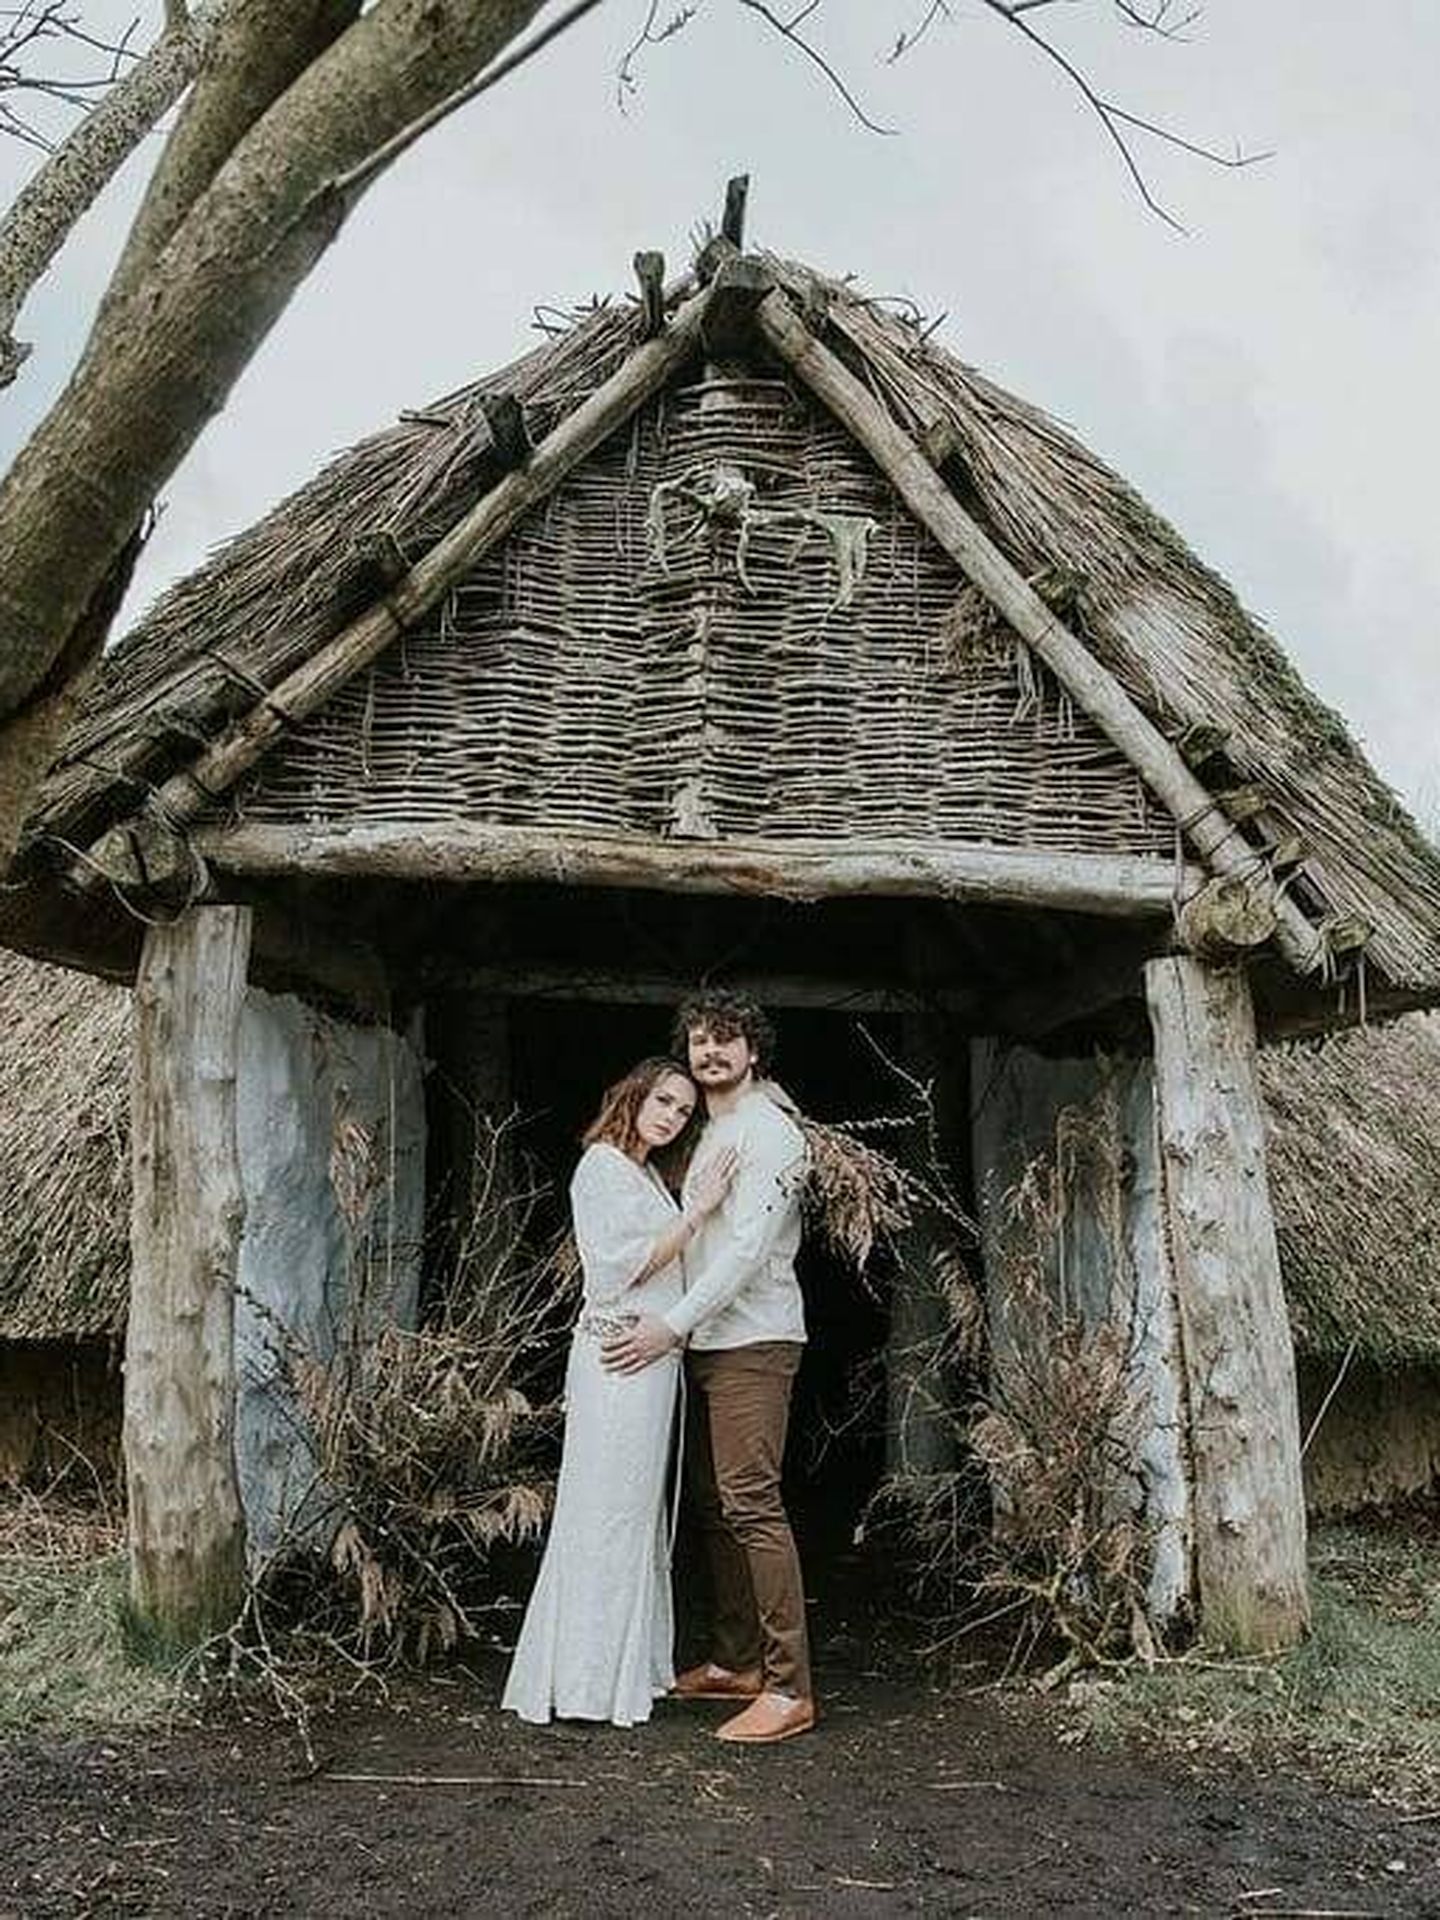 Celebra una boda celta. (Instagram/ @celticfusiondesign)